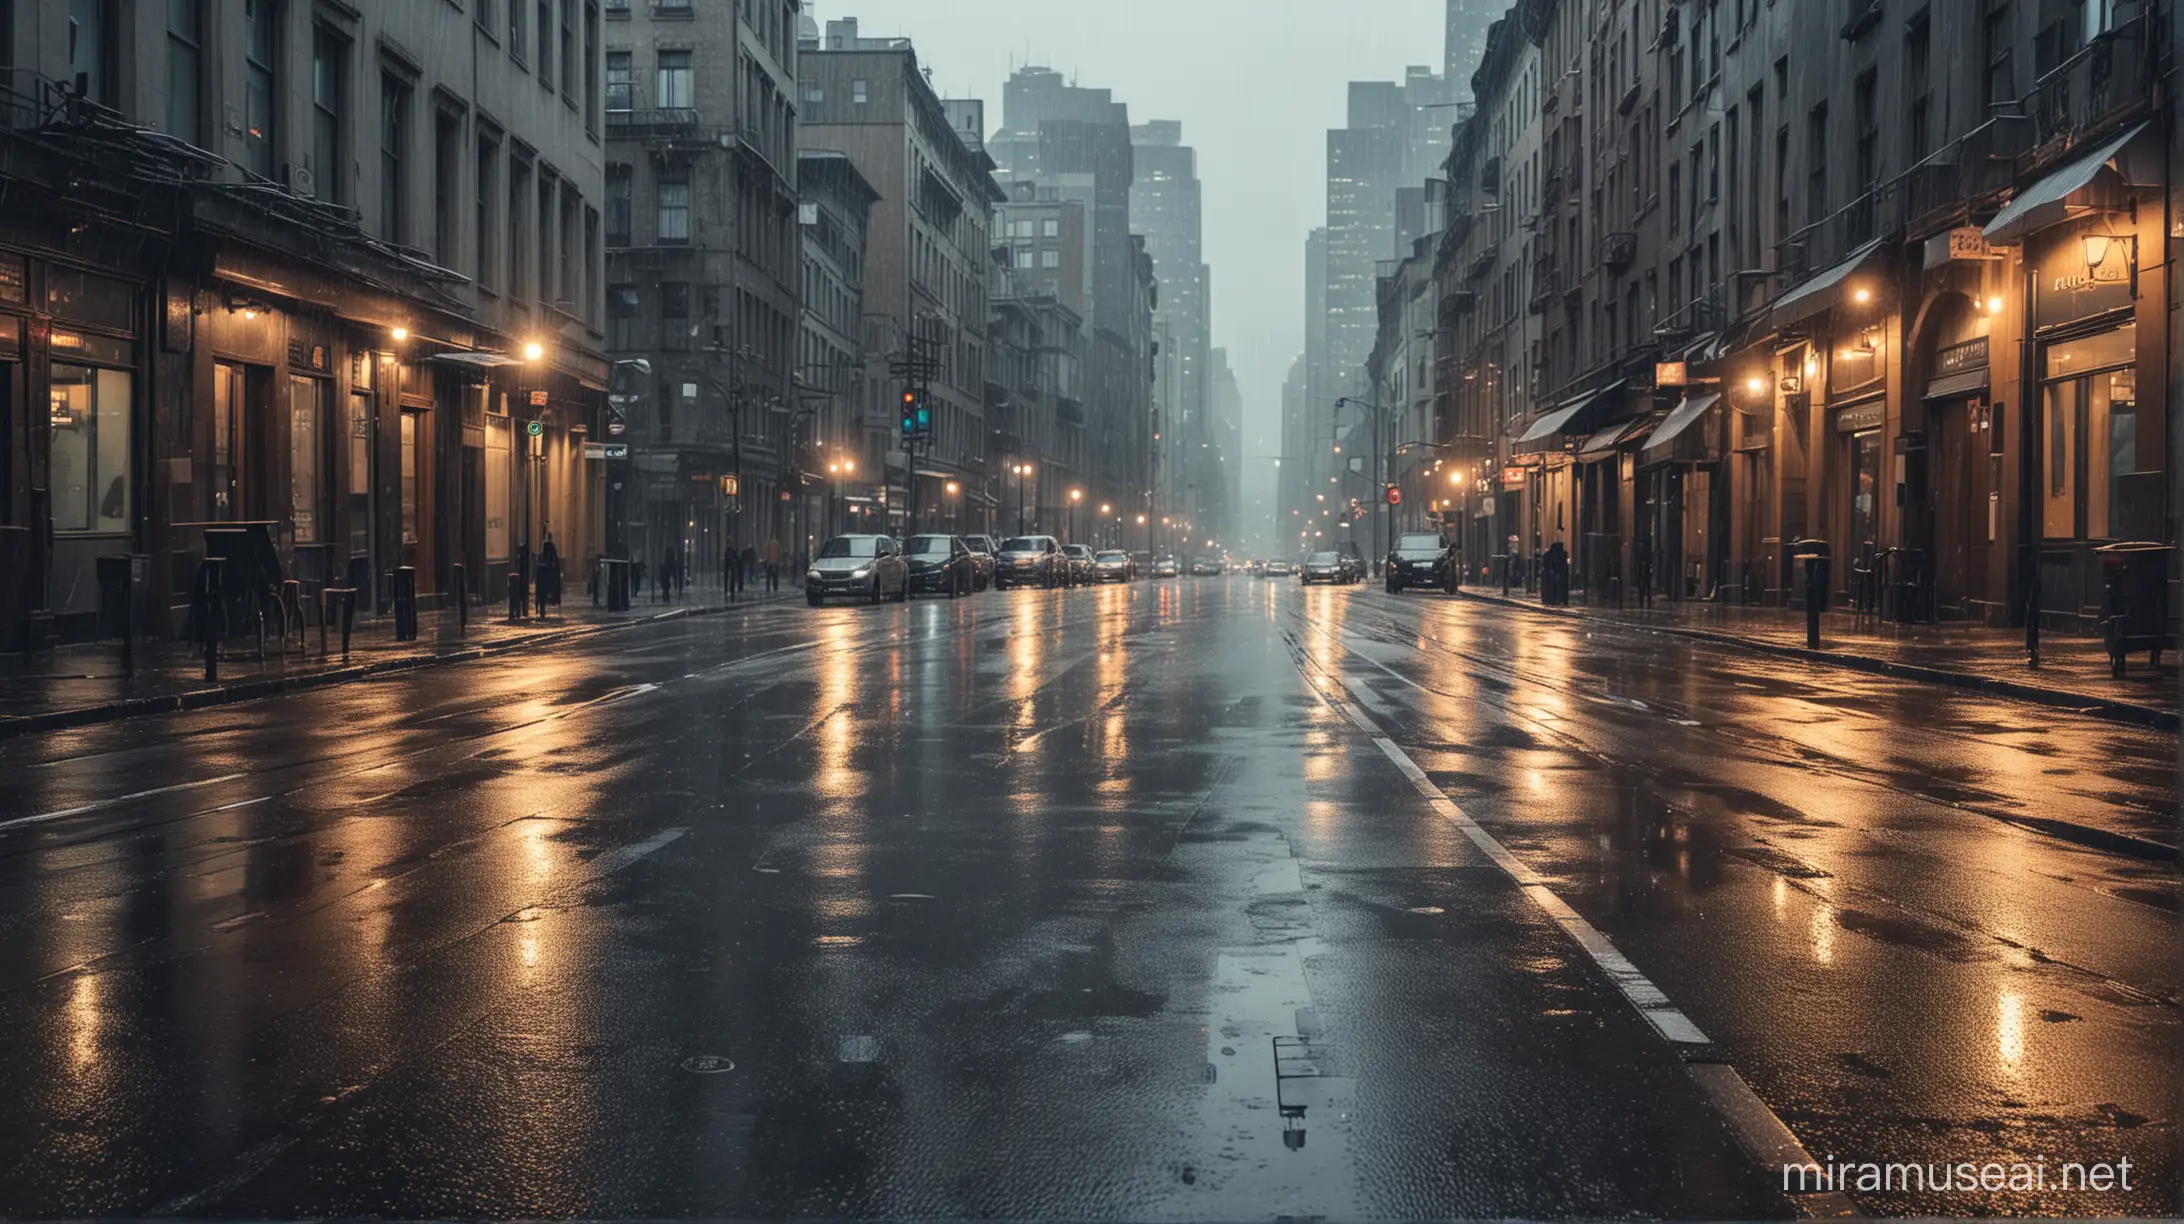 rainy background city street
